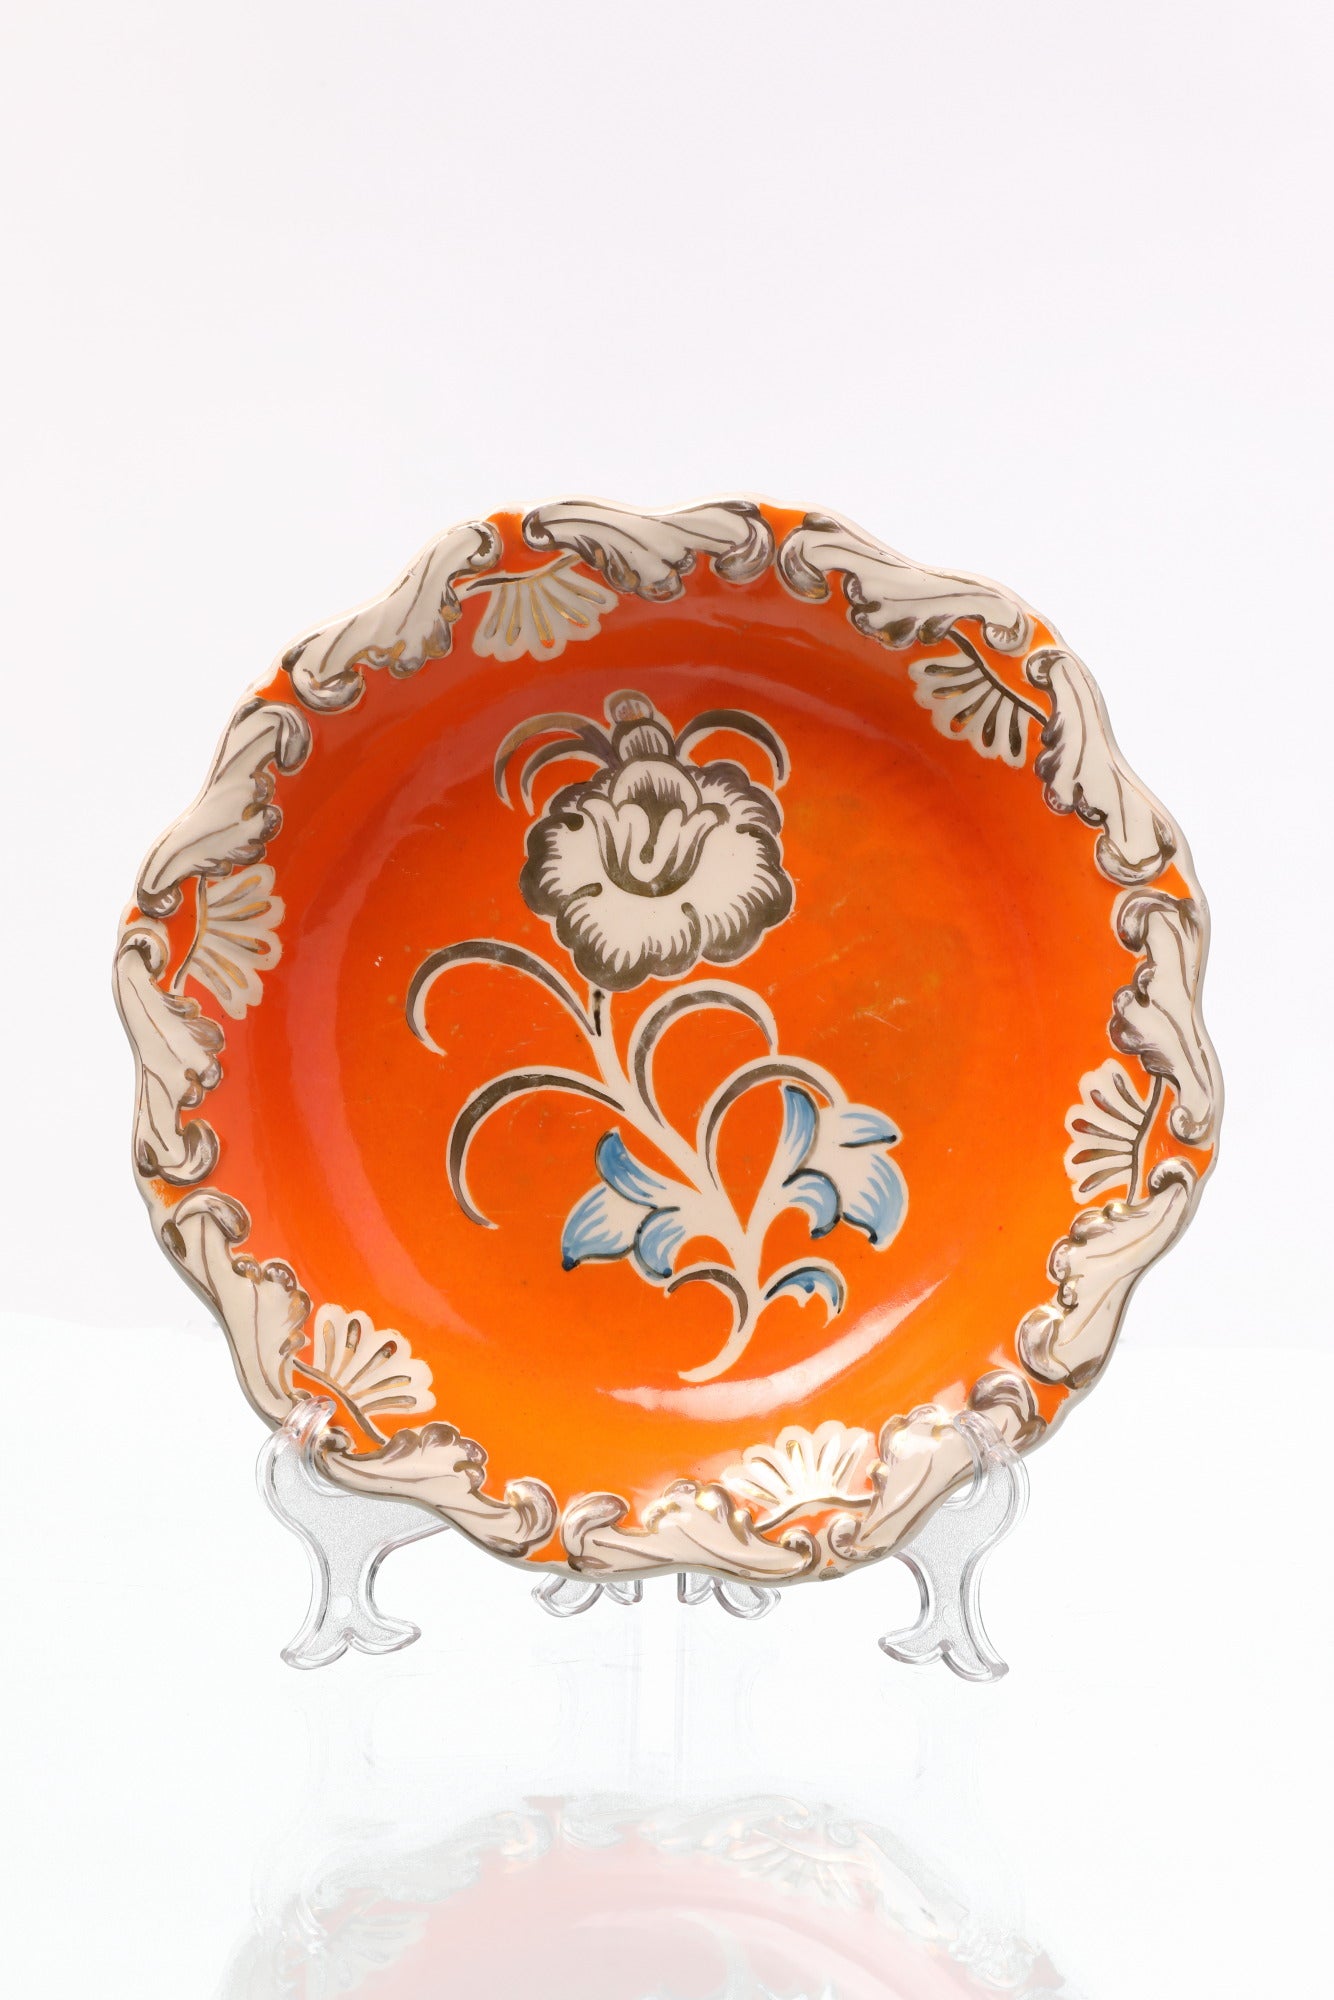 Orange ceramic centerpiece from the 50s